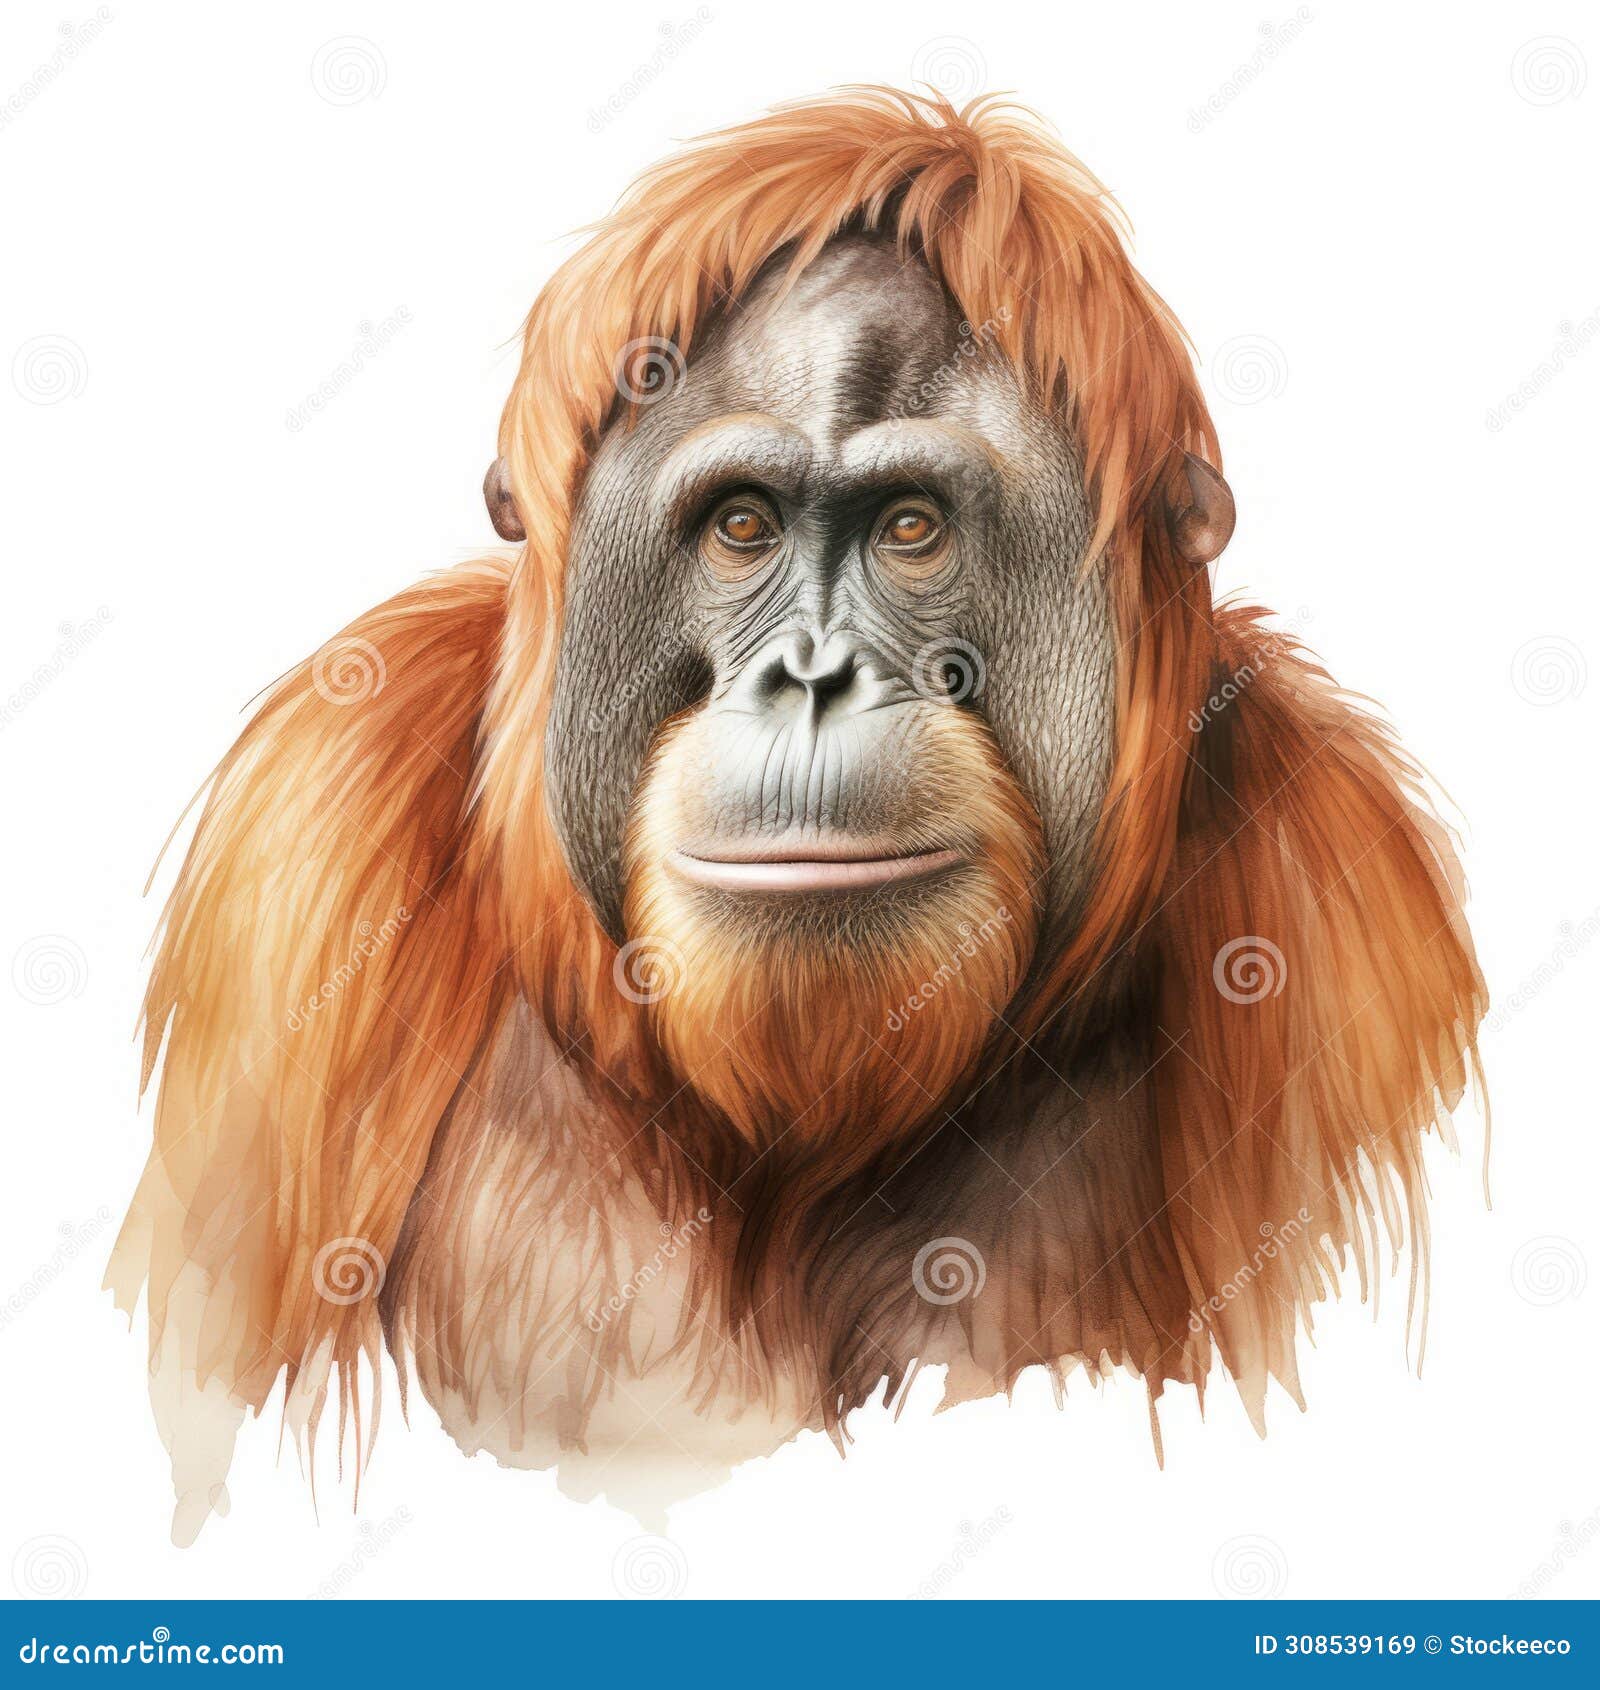 orangutan portrait watercolor  in zbrush style